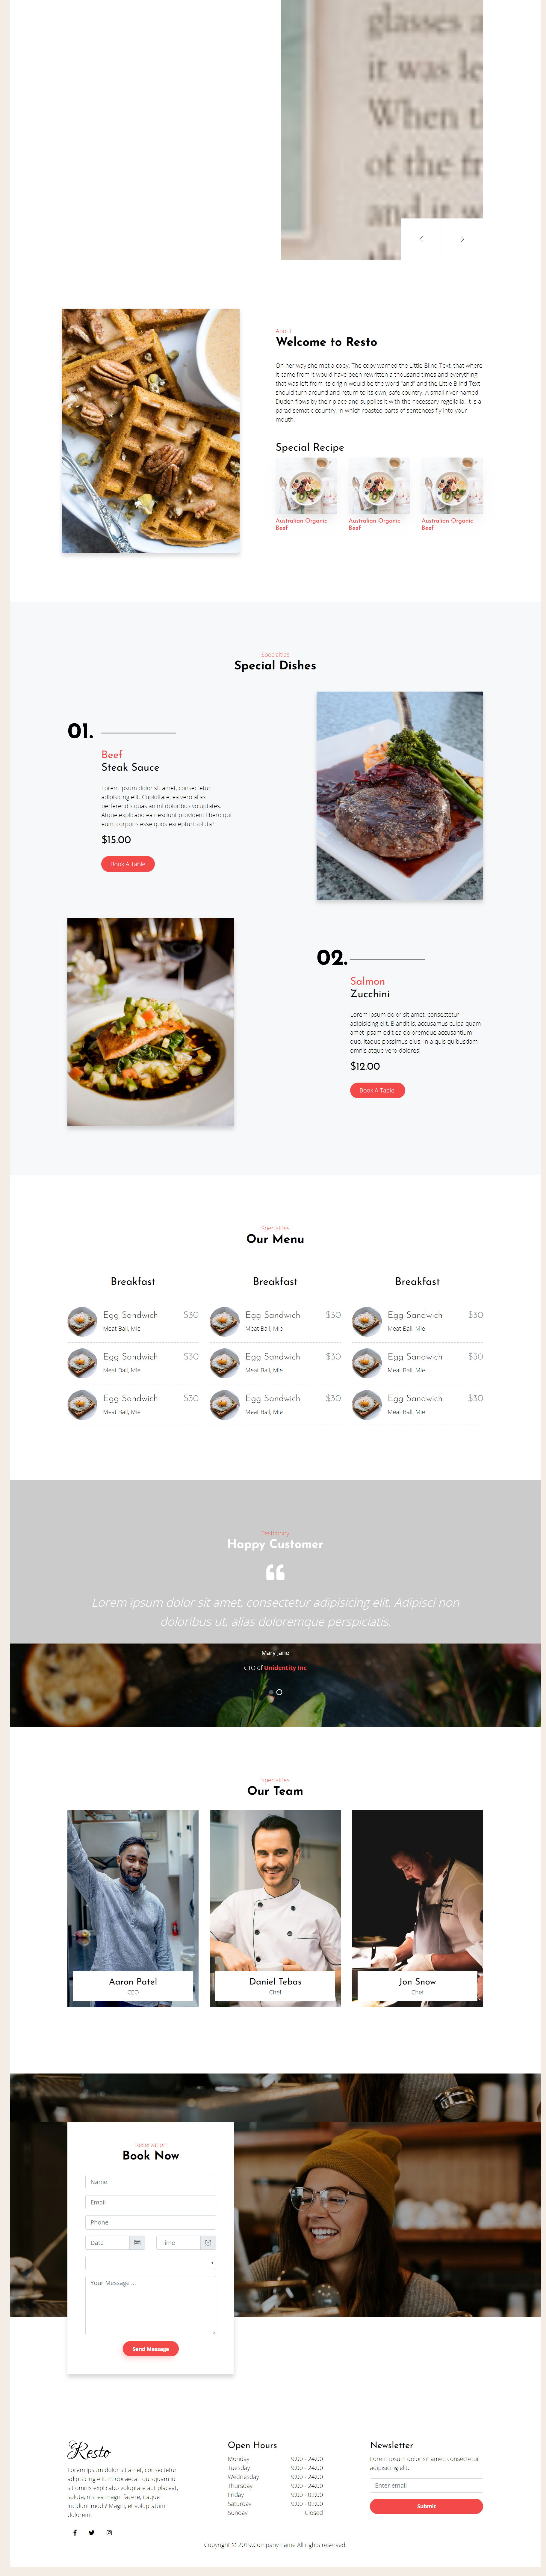 bootstrap黑色宽屏样式餐厅美食企业网站模板代码下载